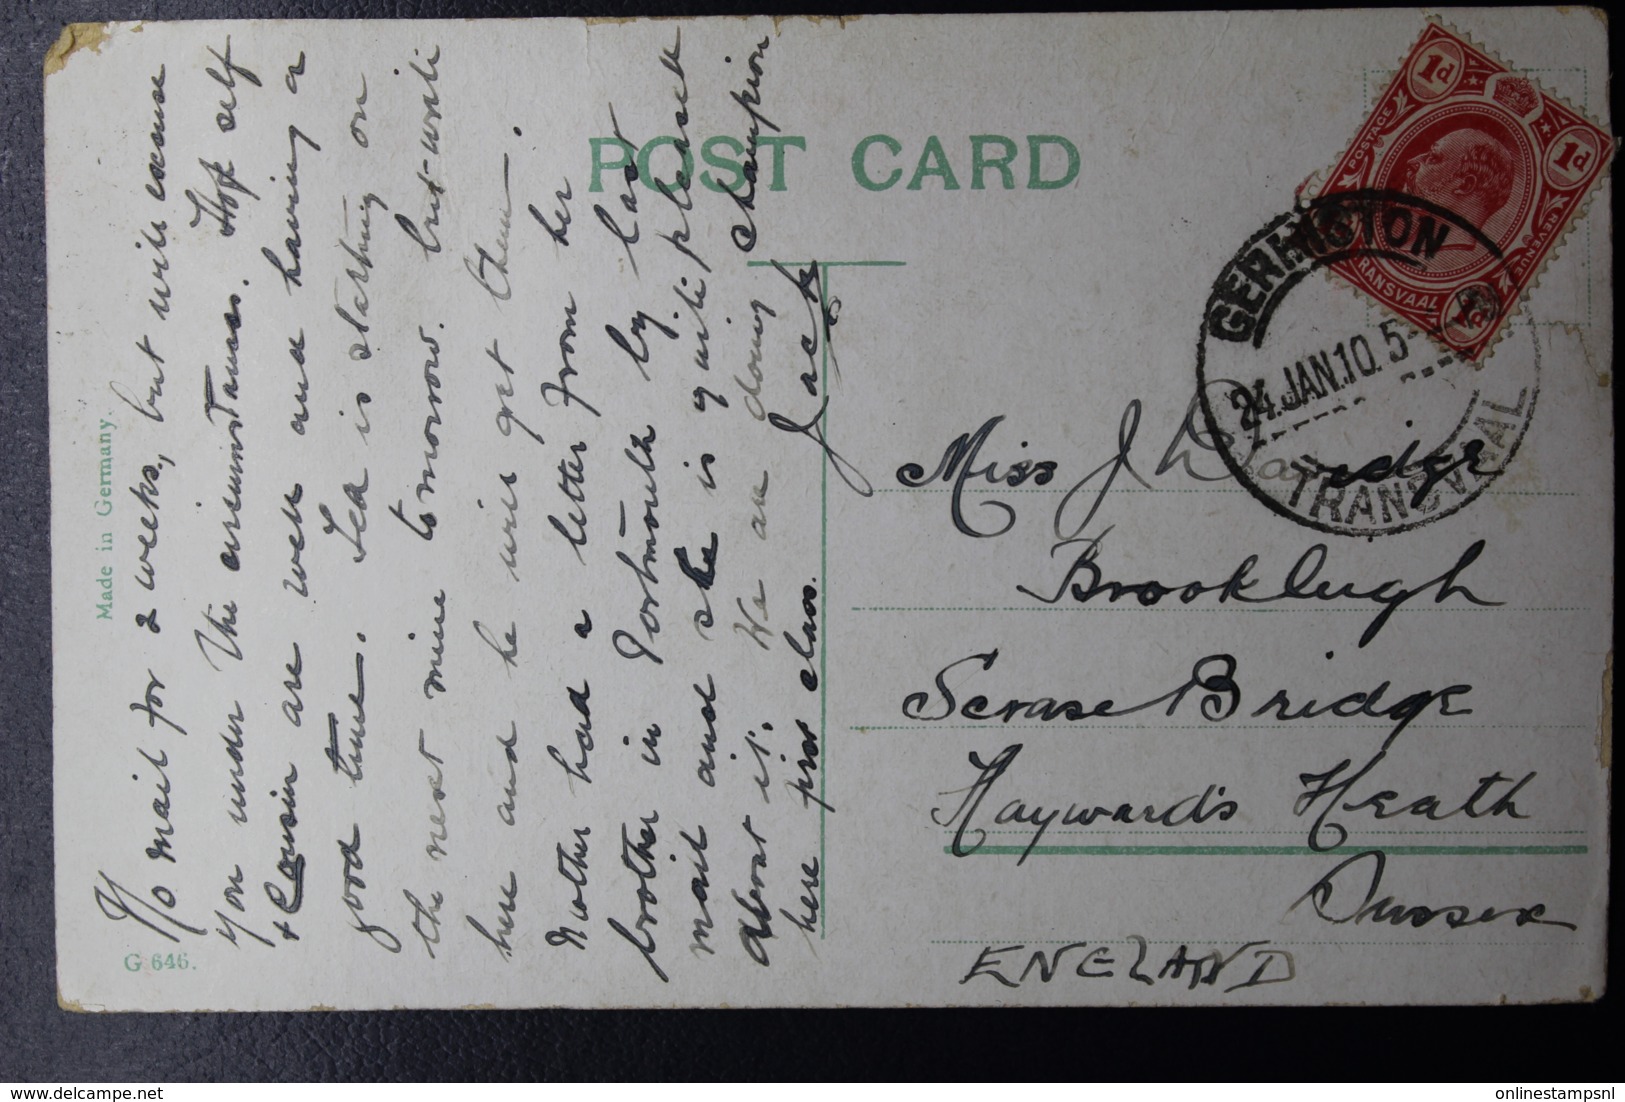 Transvaal Postcard GERMISTON -> UK  27-10-1910 - Transvaal (1870-1909)